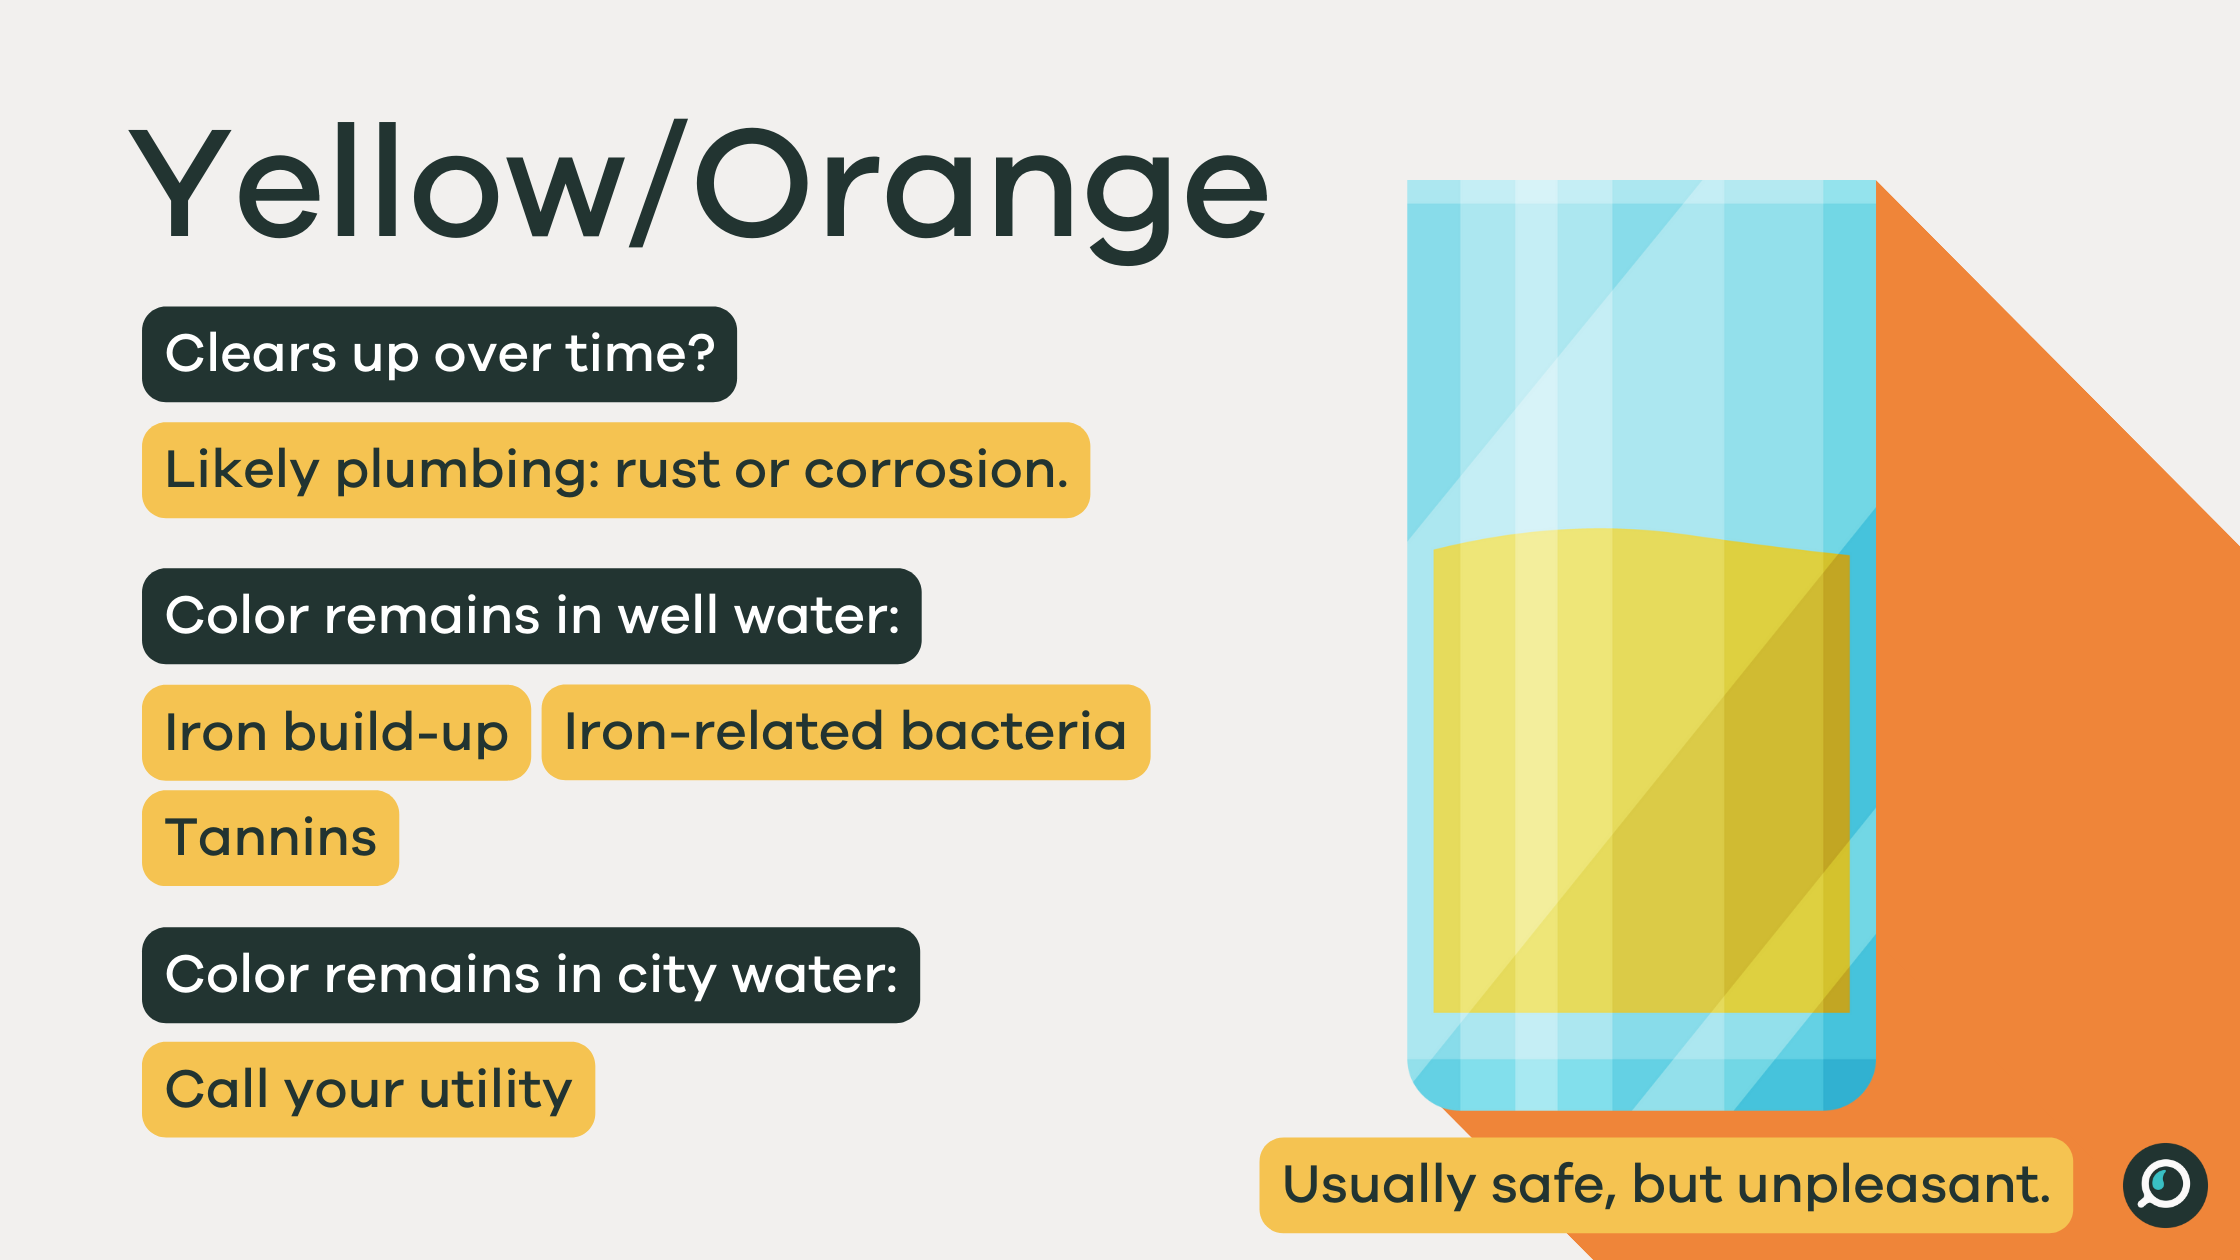 yellow/orange water visual cues